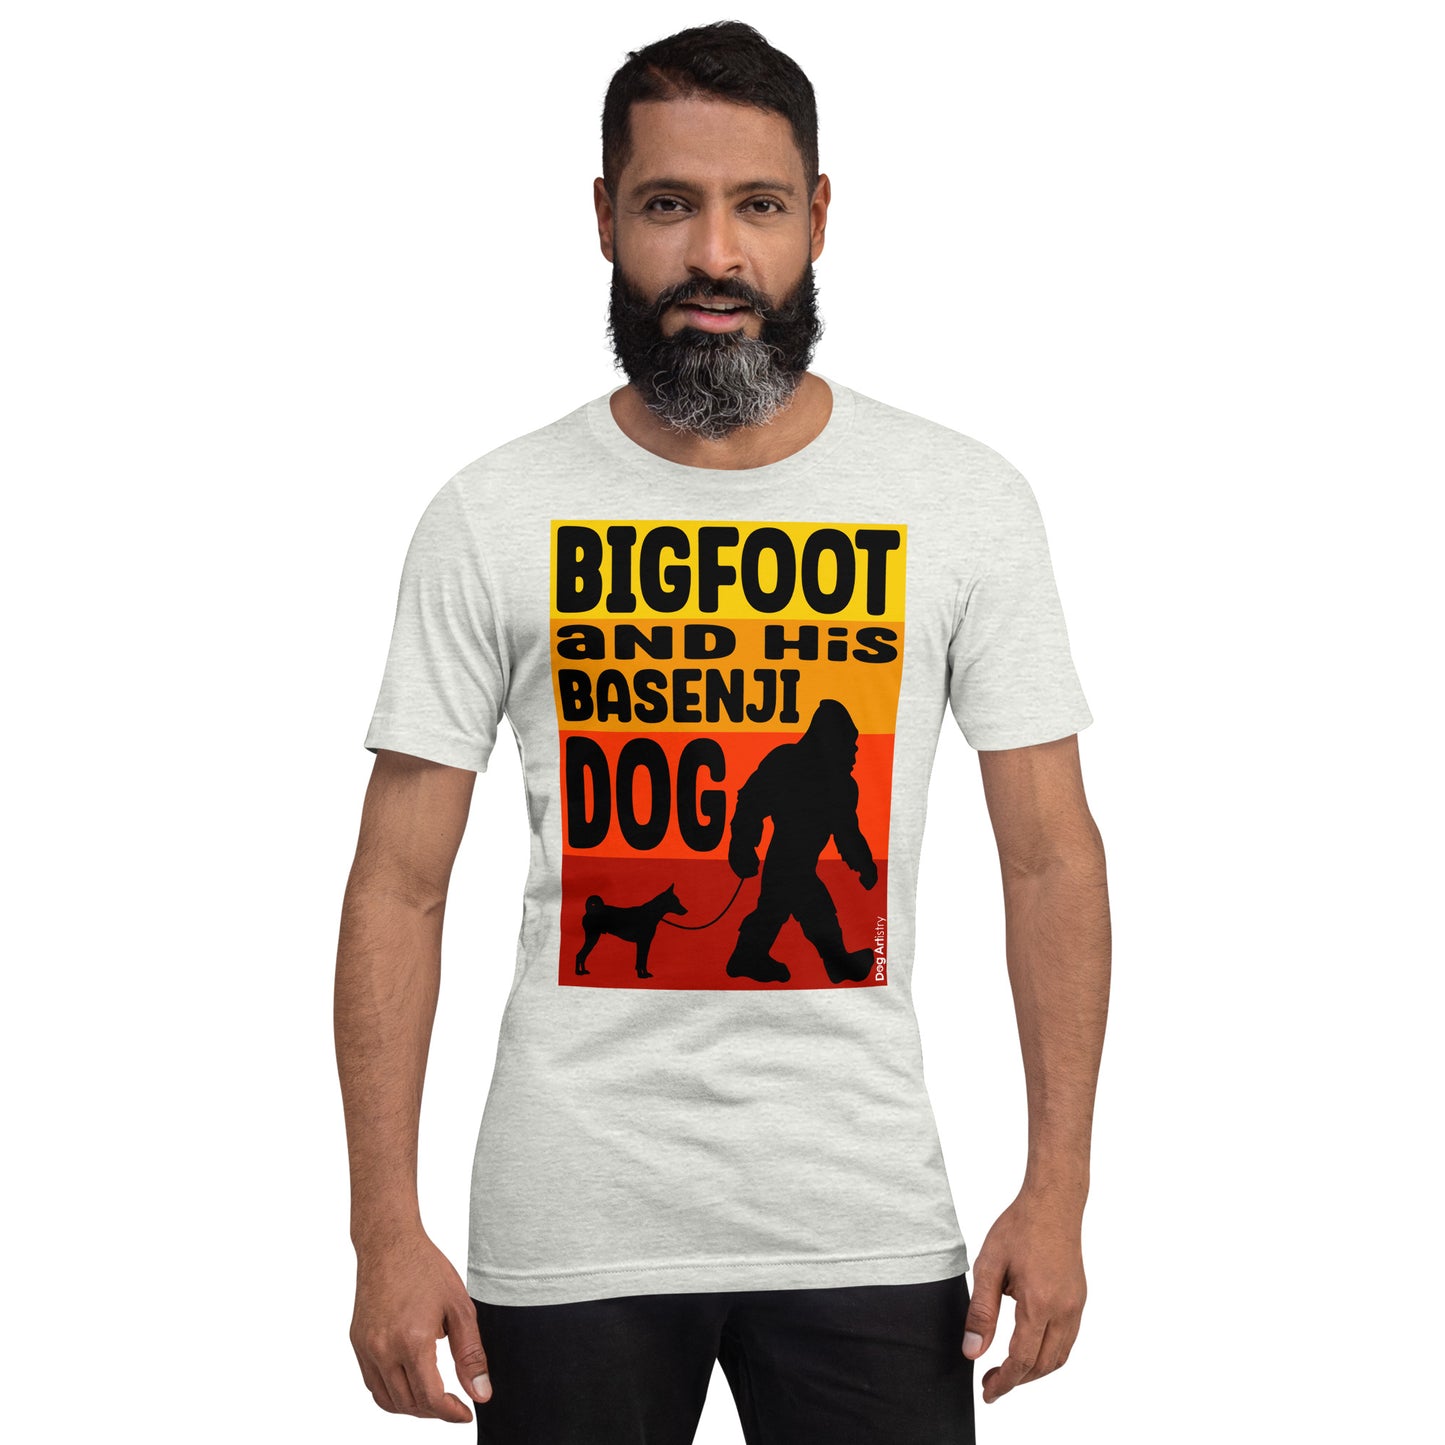 Big foot and his Basenji unisex ash t-shirt by Dog Artistry.